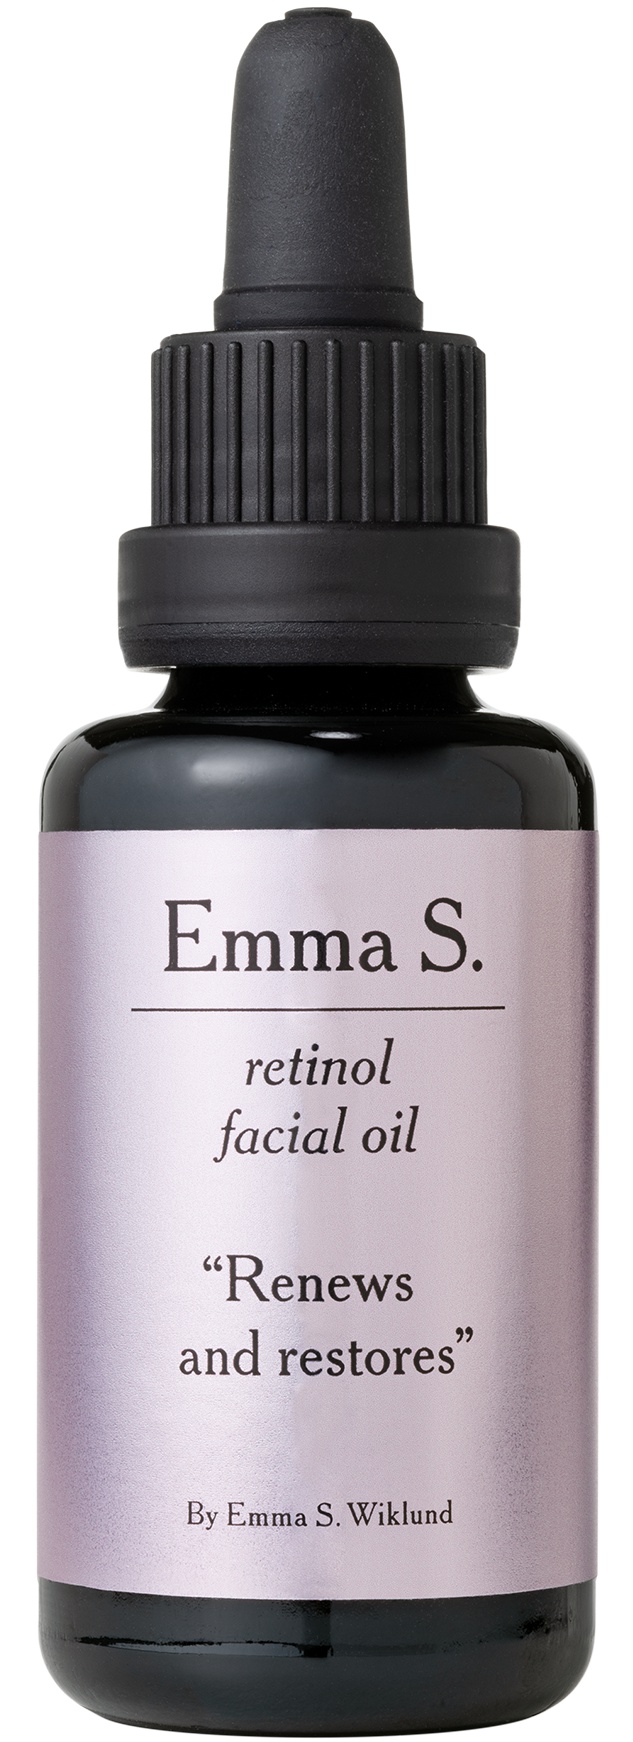 Emma S. Retinol Facial Oil